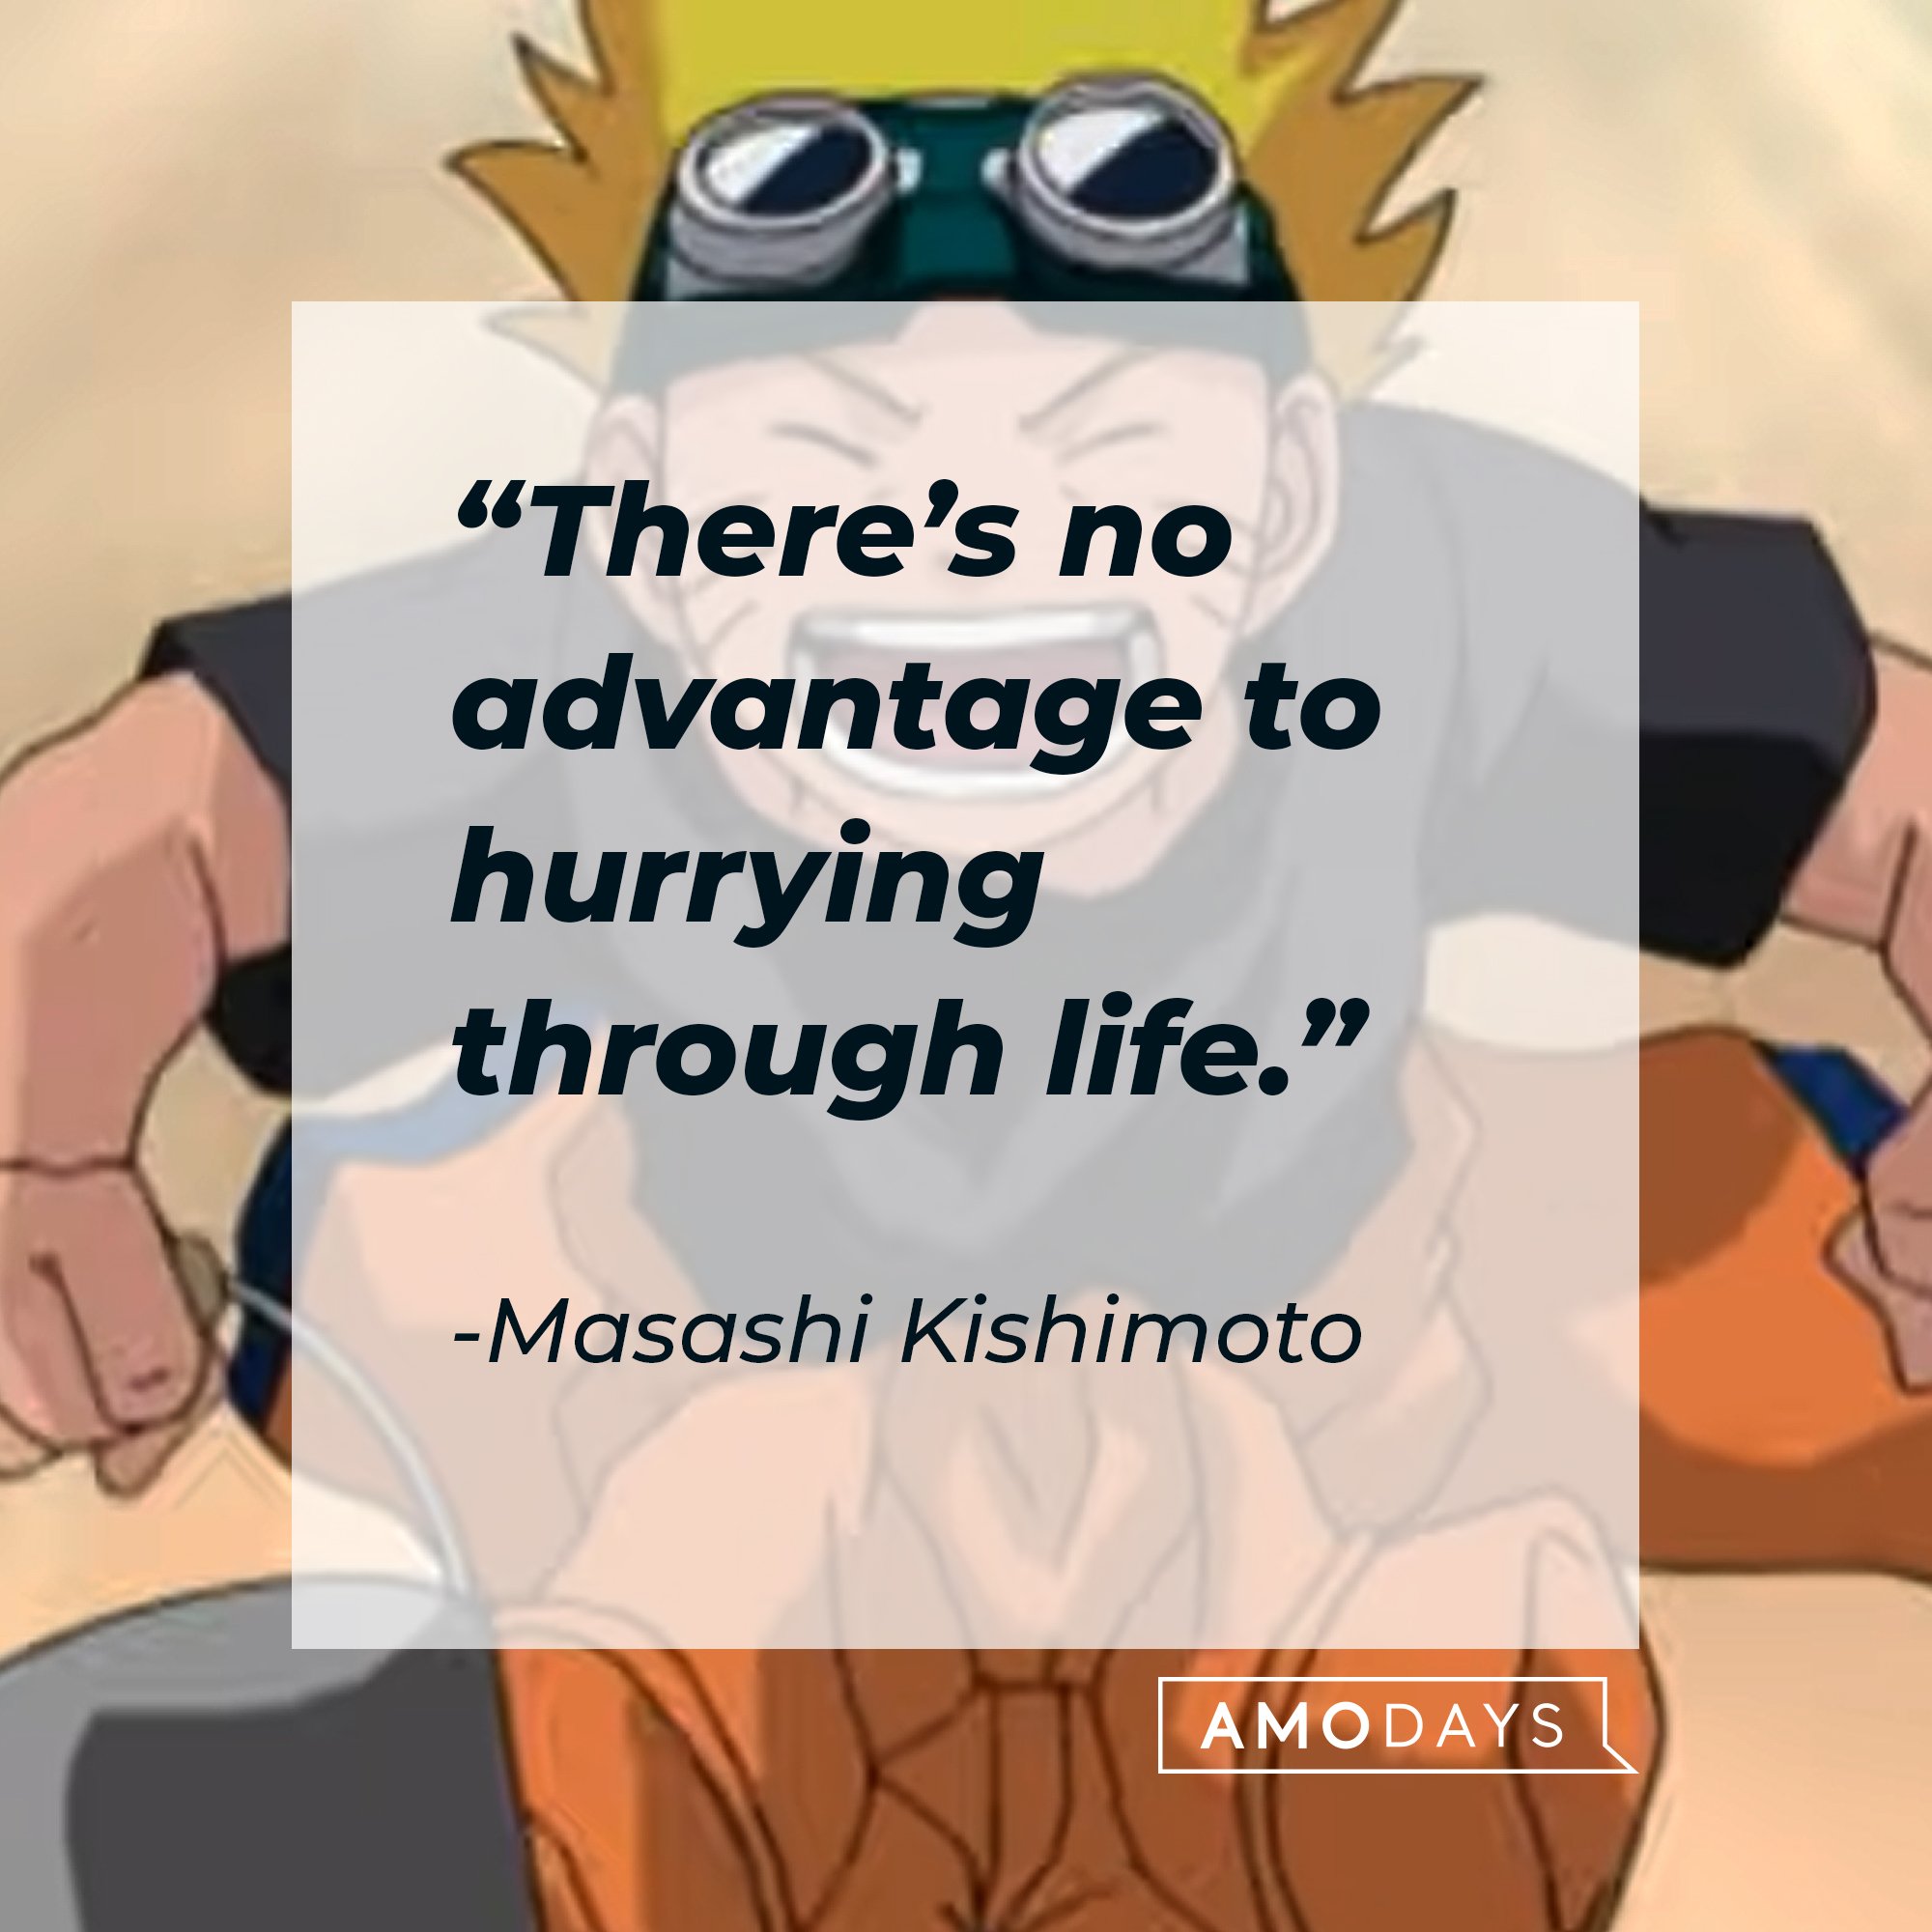 Masashi Kishimoto's quote: “There’s no advantage to hurrying through life.” | Image: AmoDays